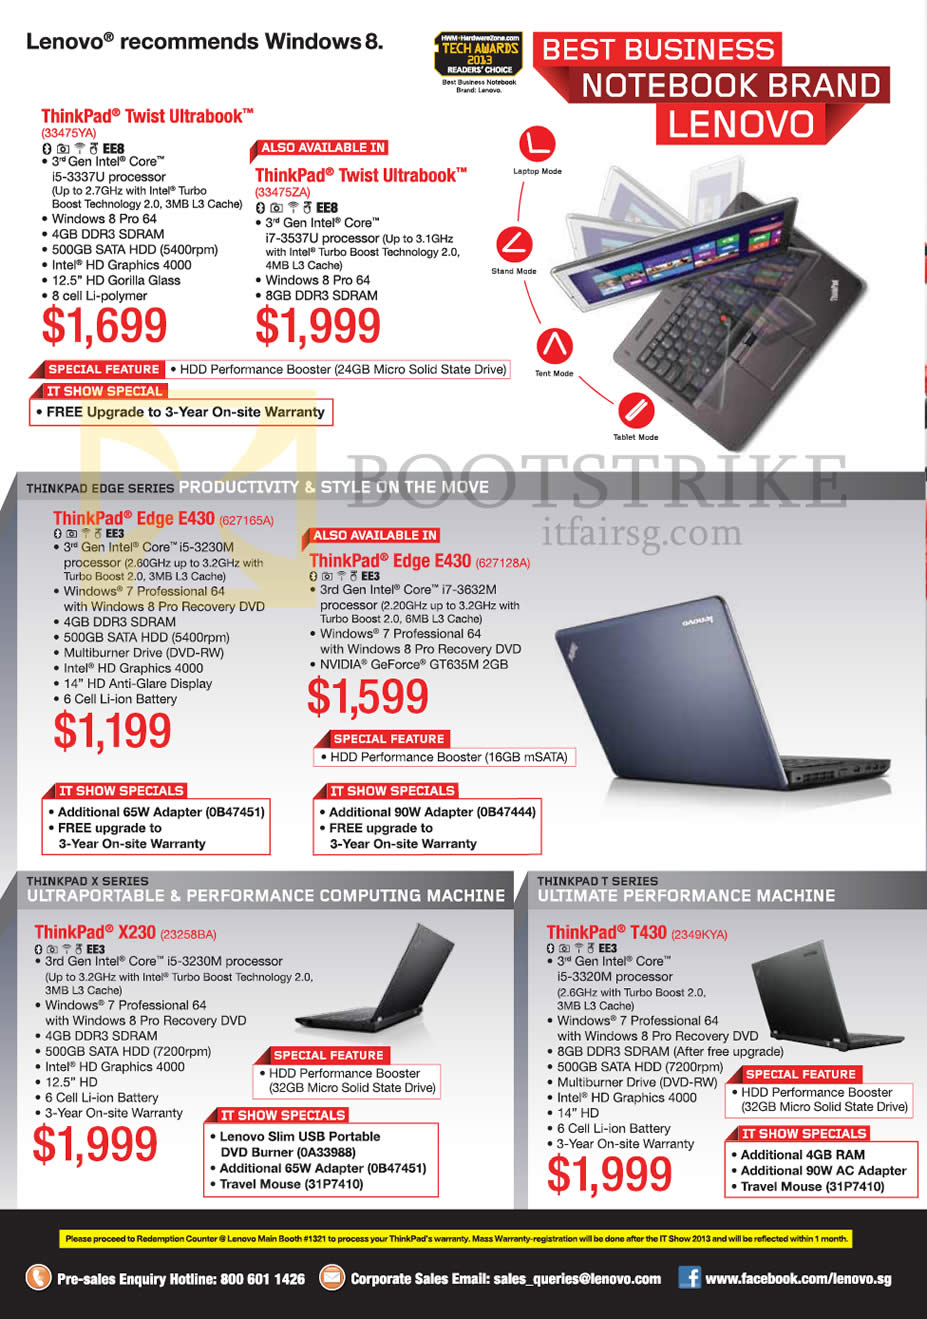 IT SHOW 2013 price list image brochure of Lenovo Notebooks ThinkPad Twist Ultrabook, Edge E430, X230, T430